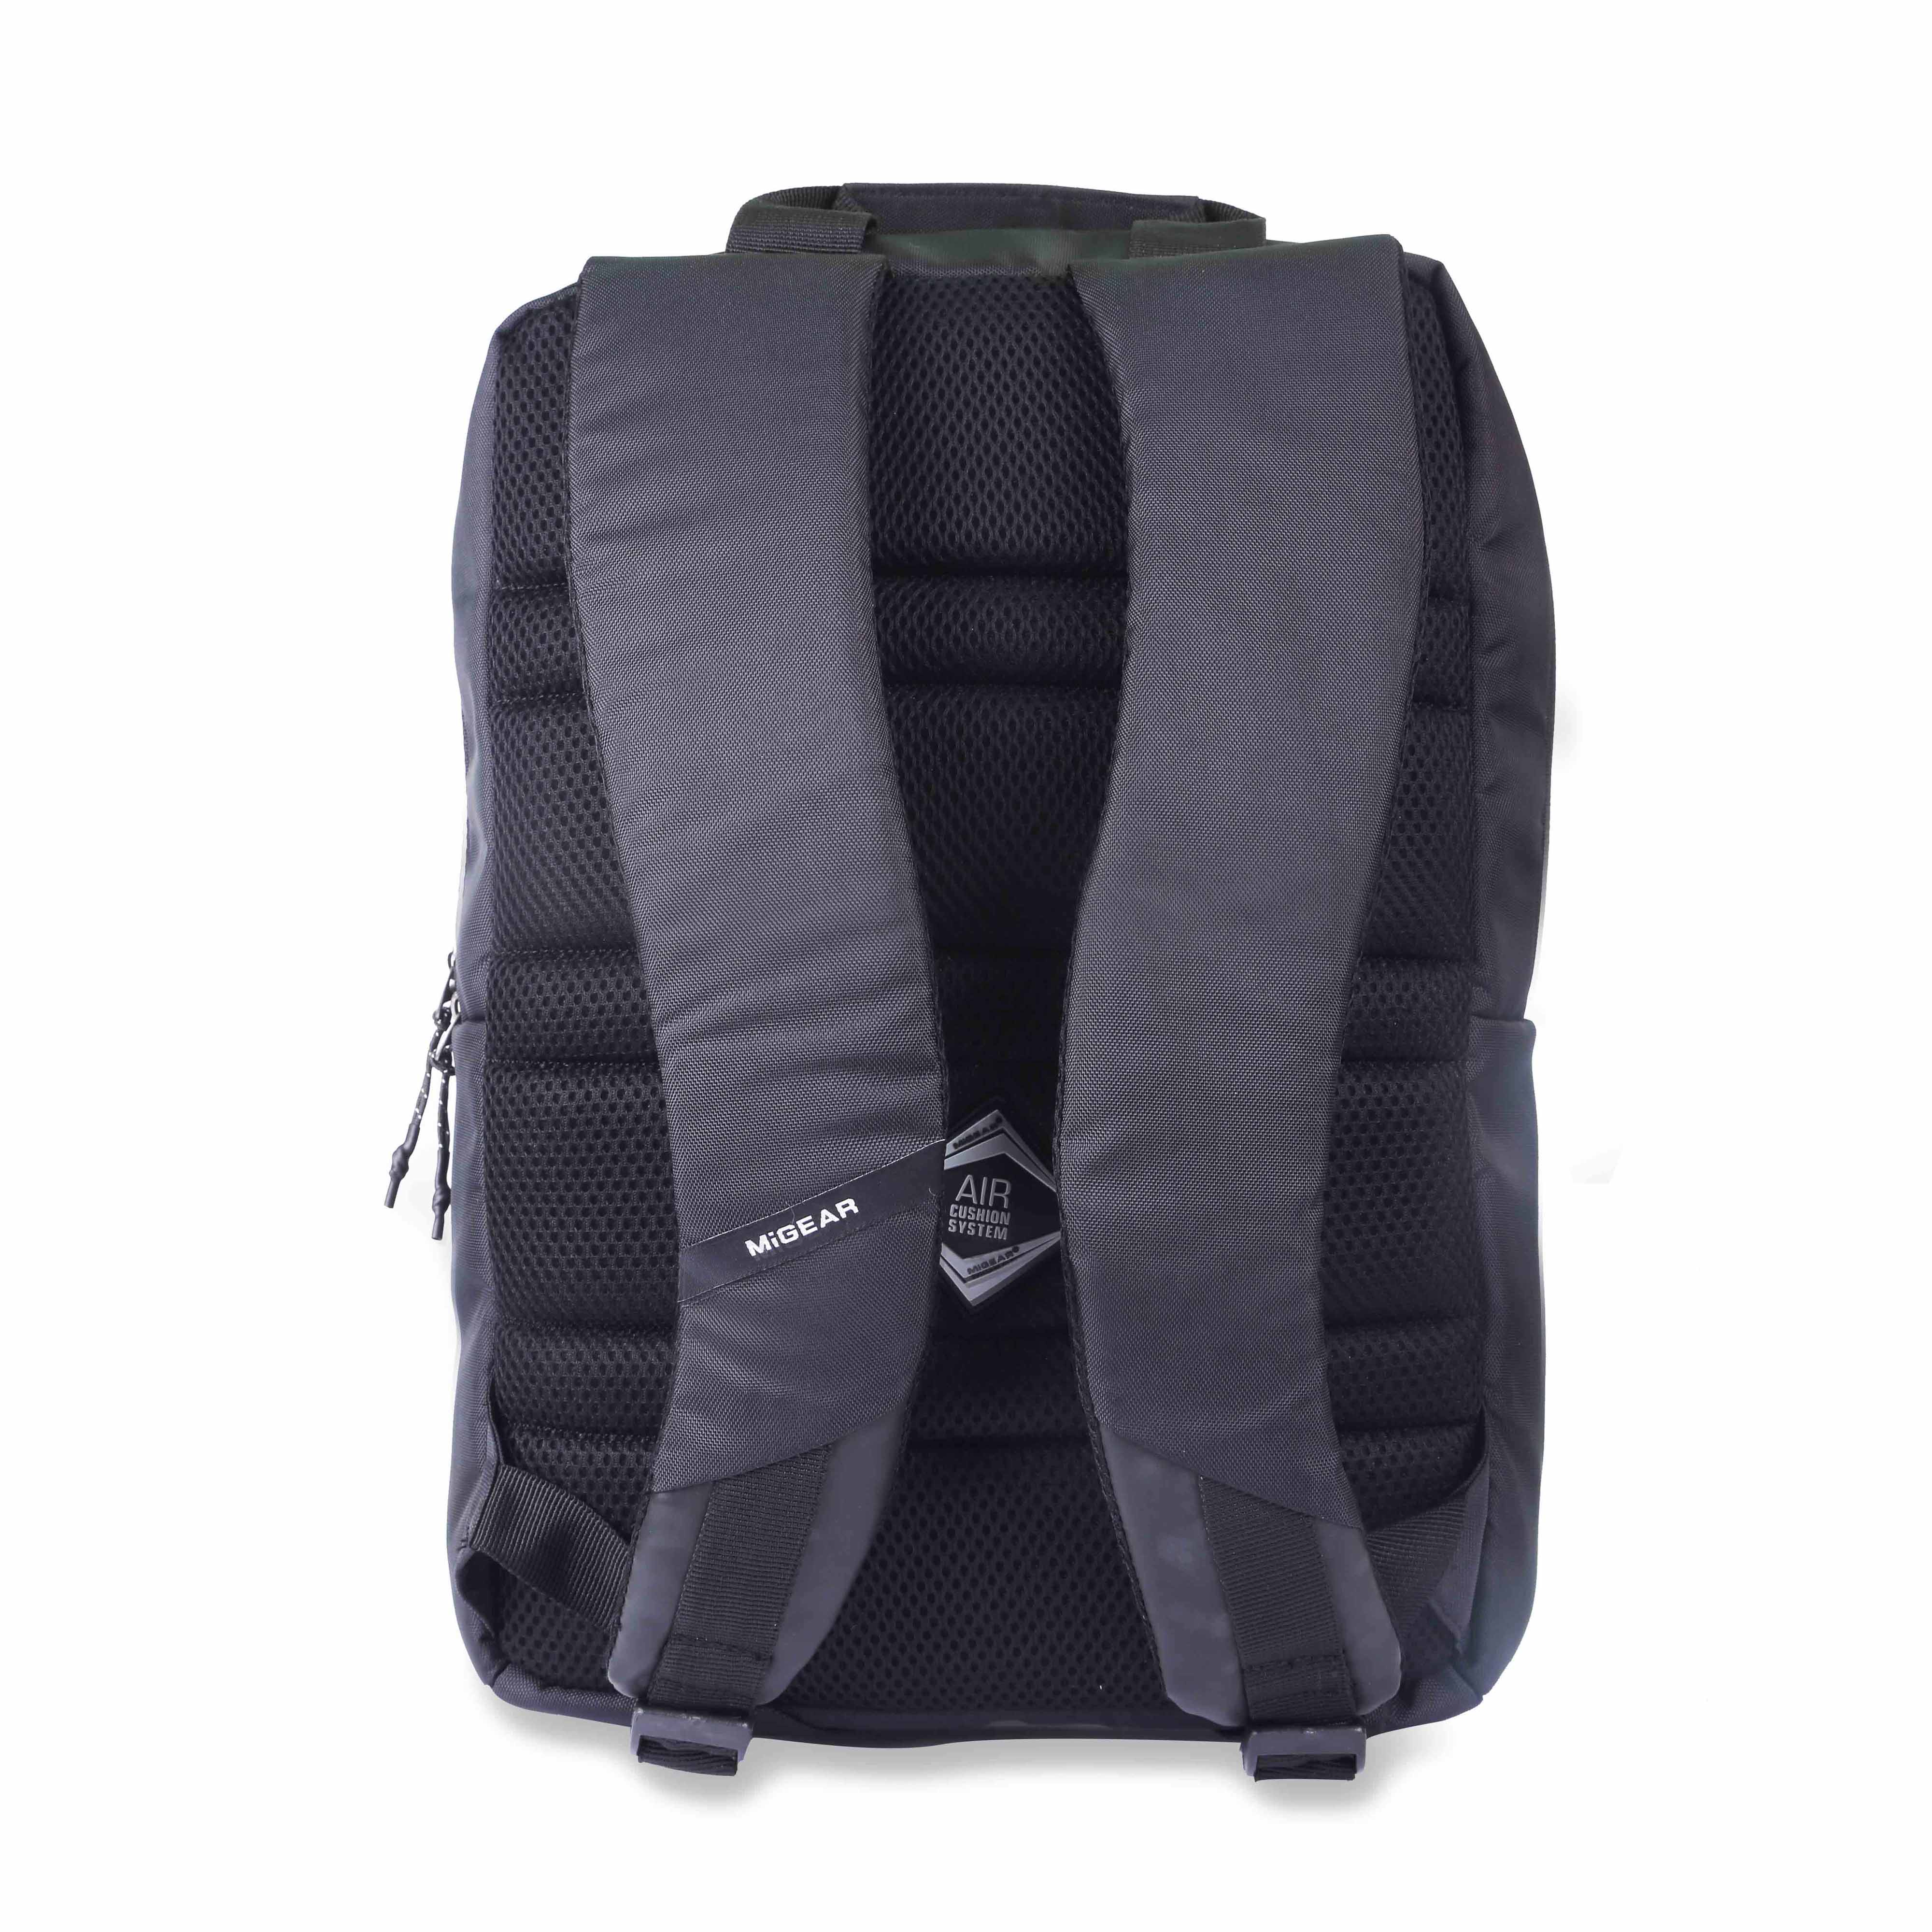 Blacknest Backpack